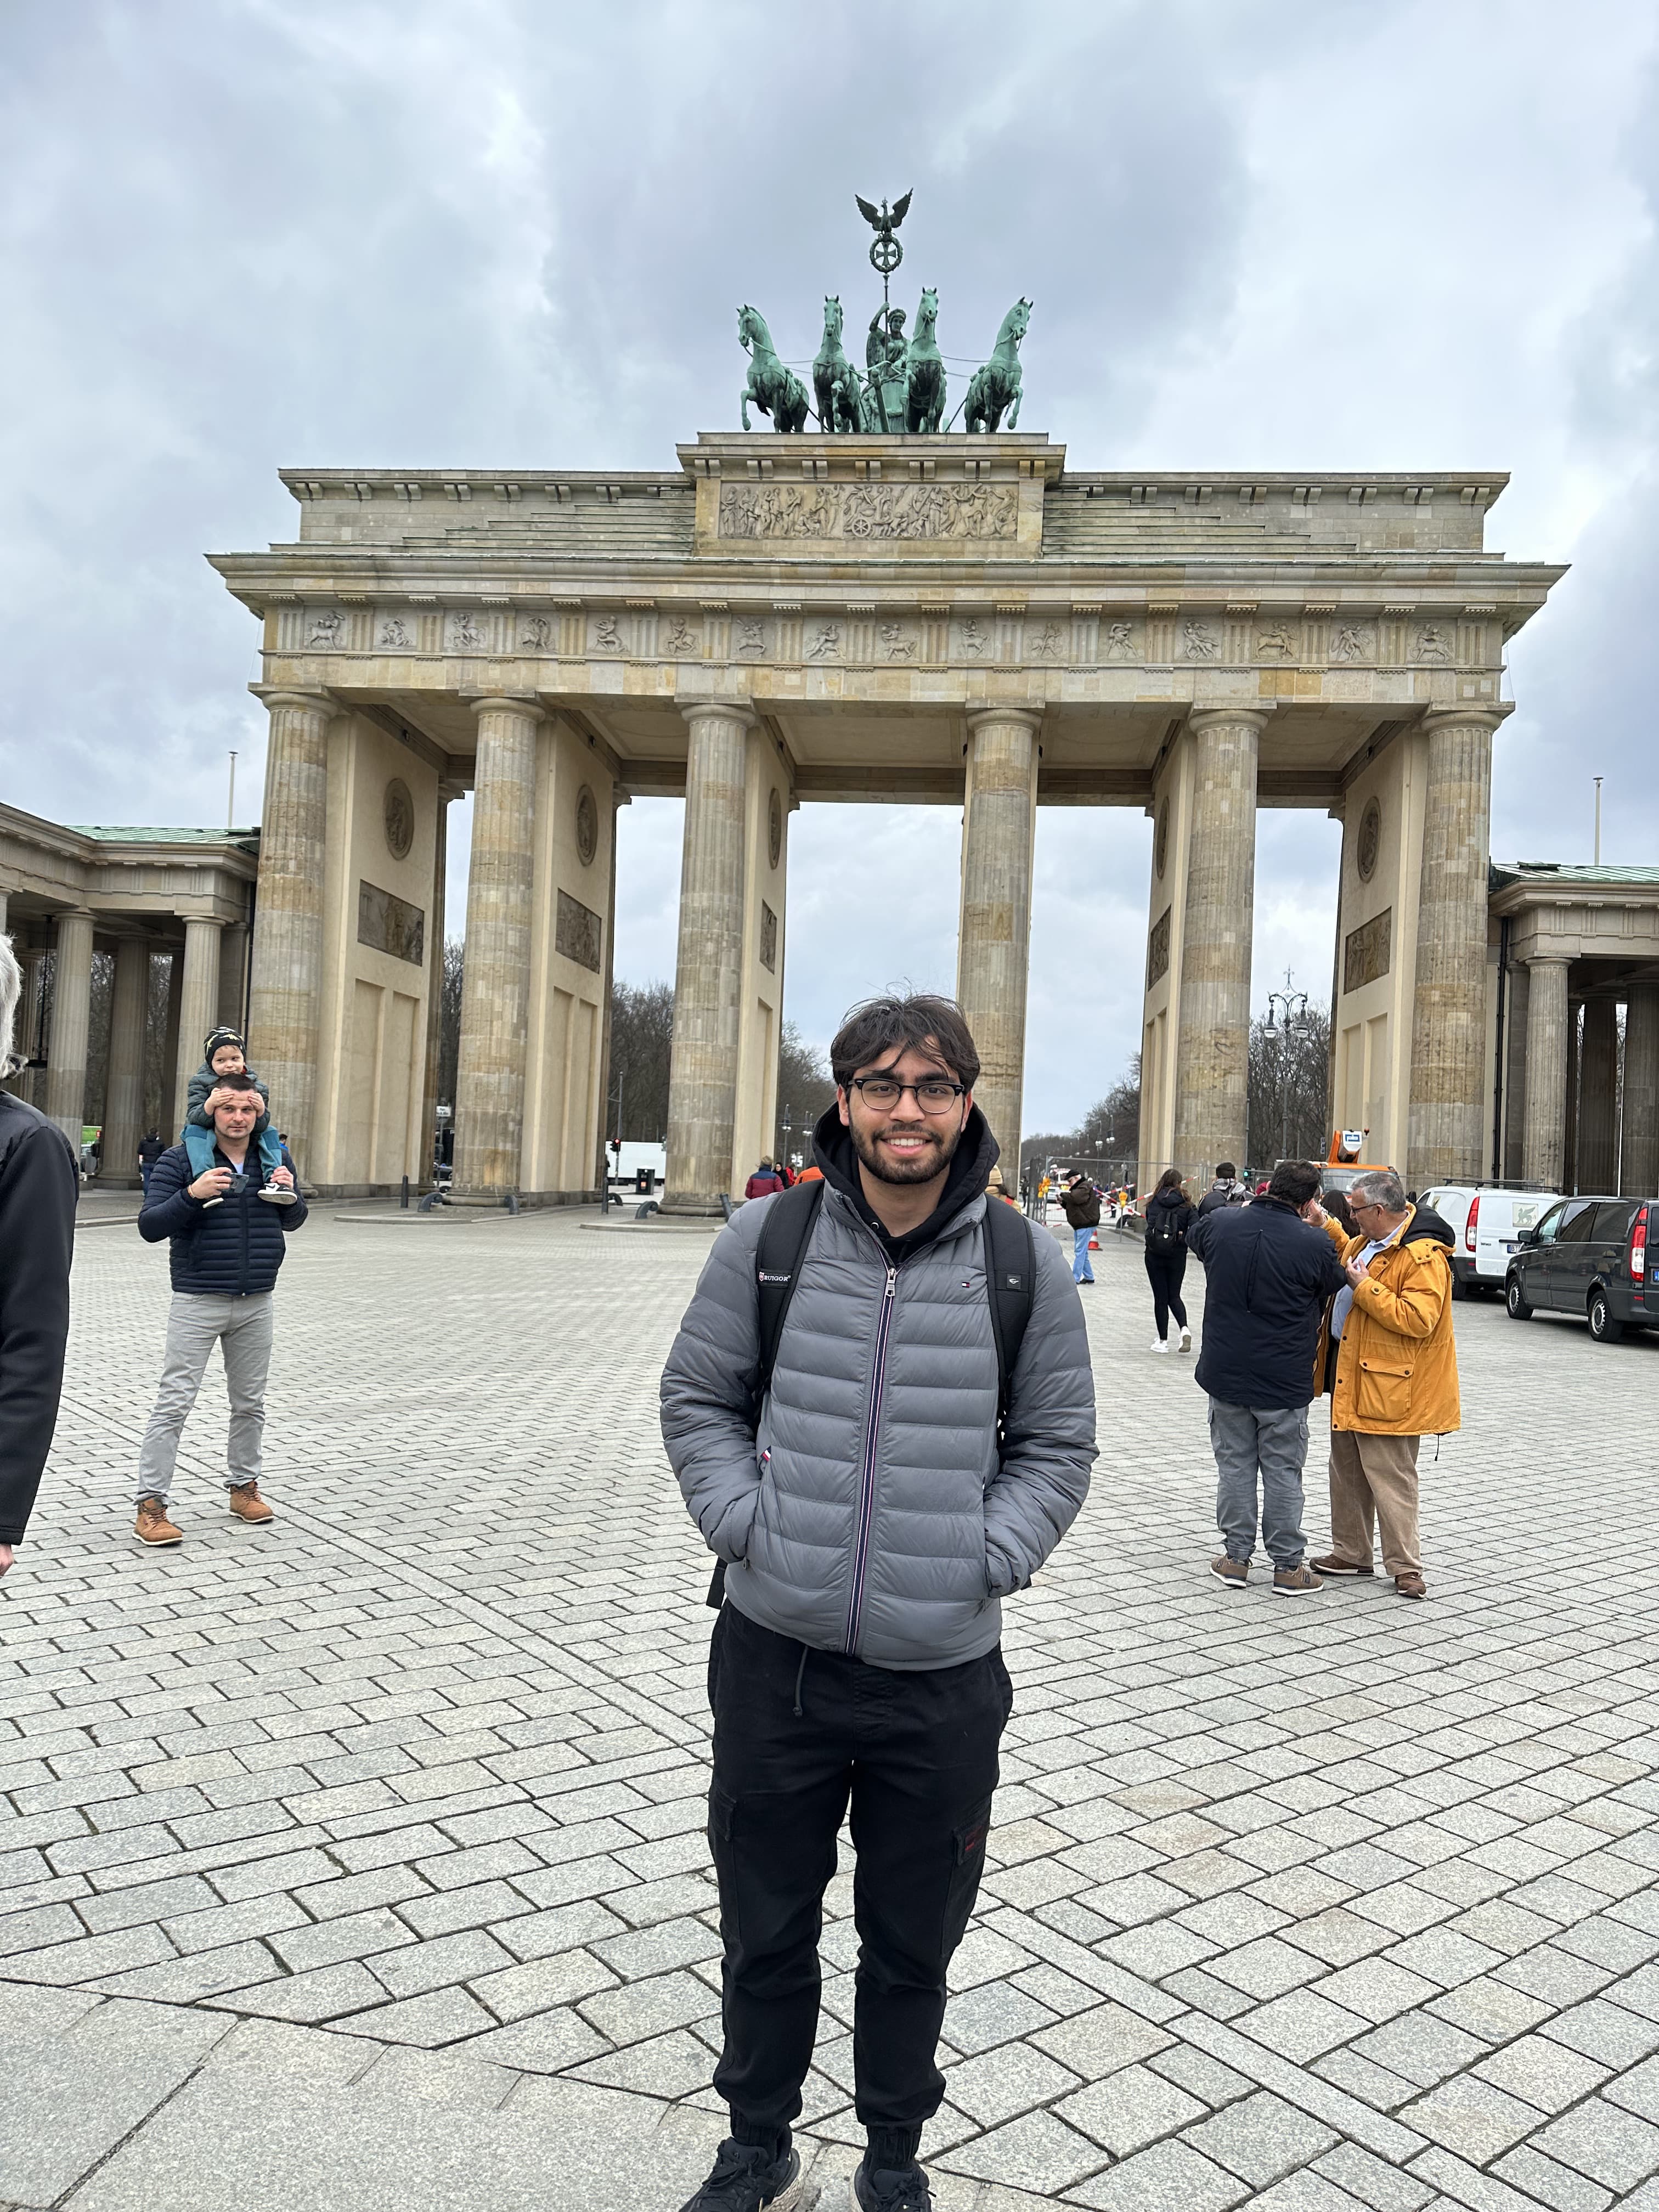 Brandenberg Gate in Berlin, Germany